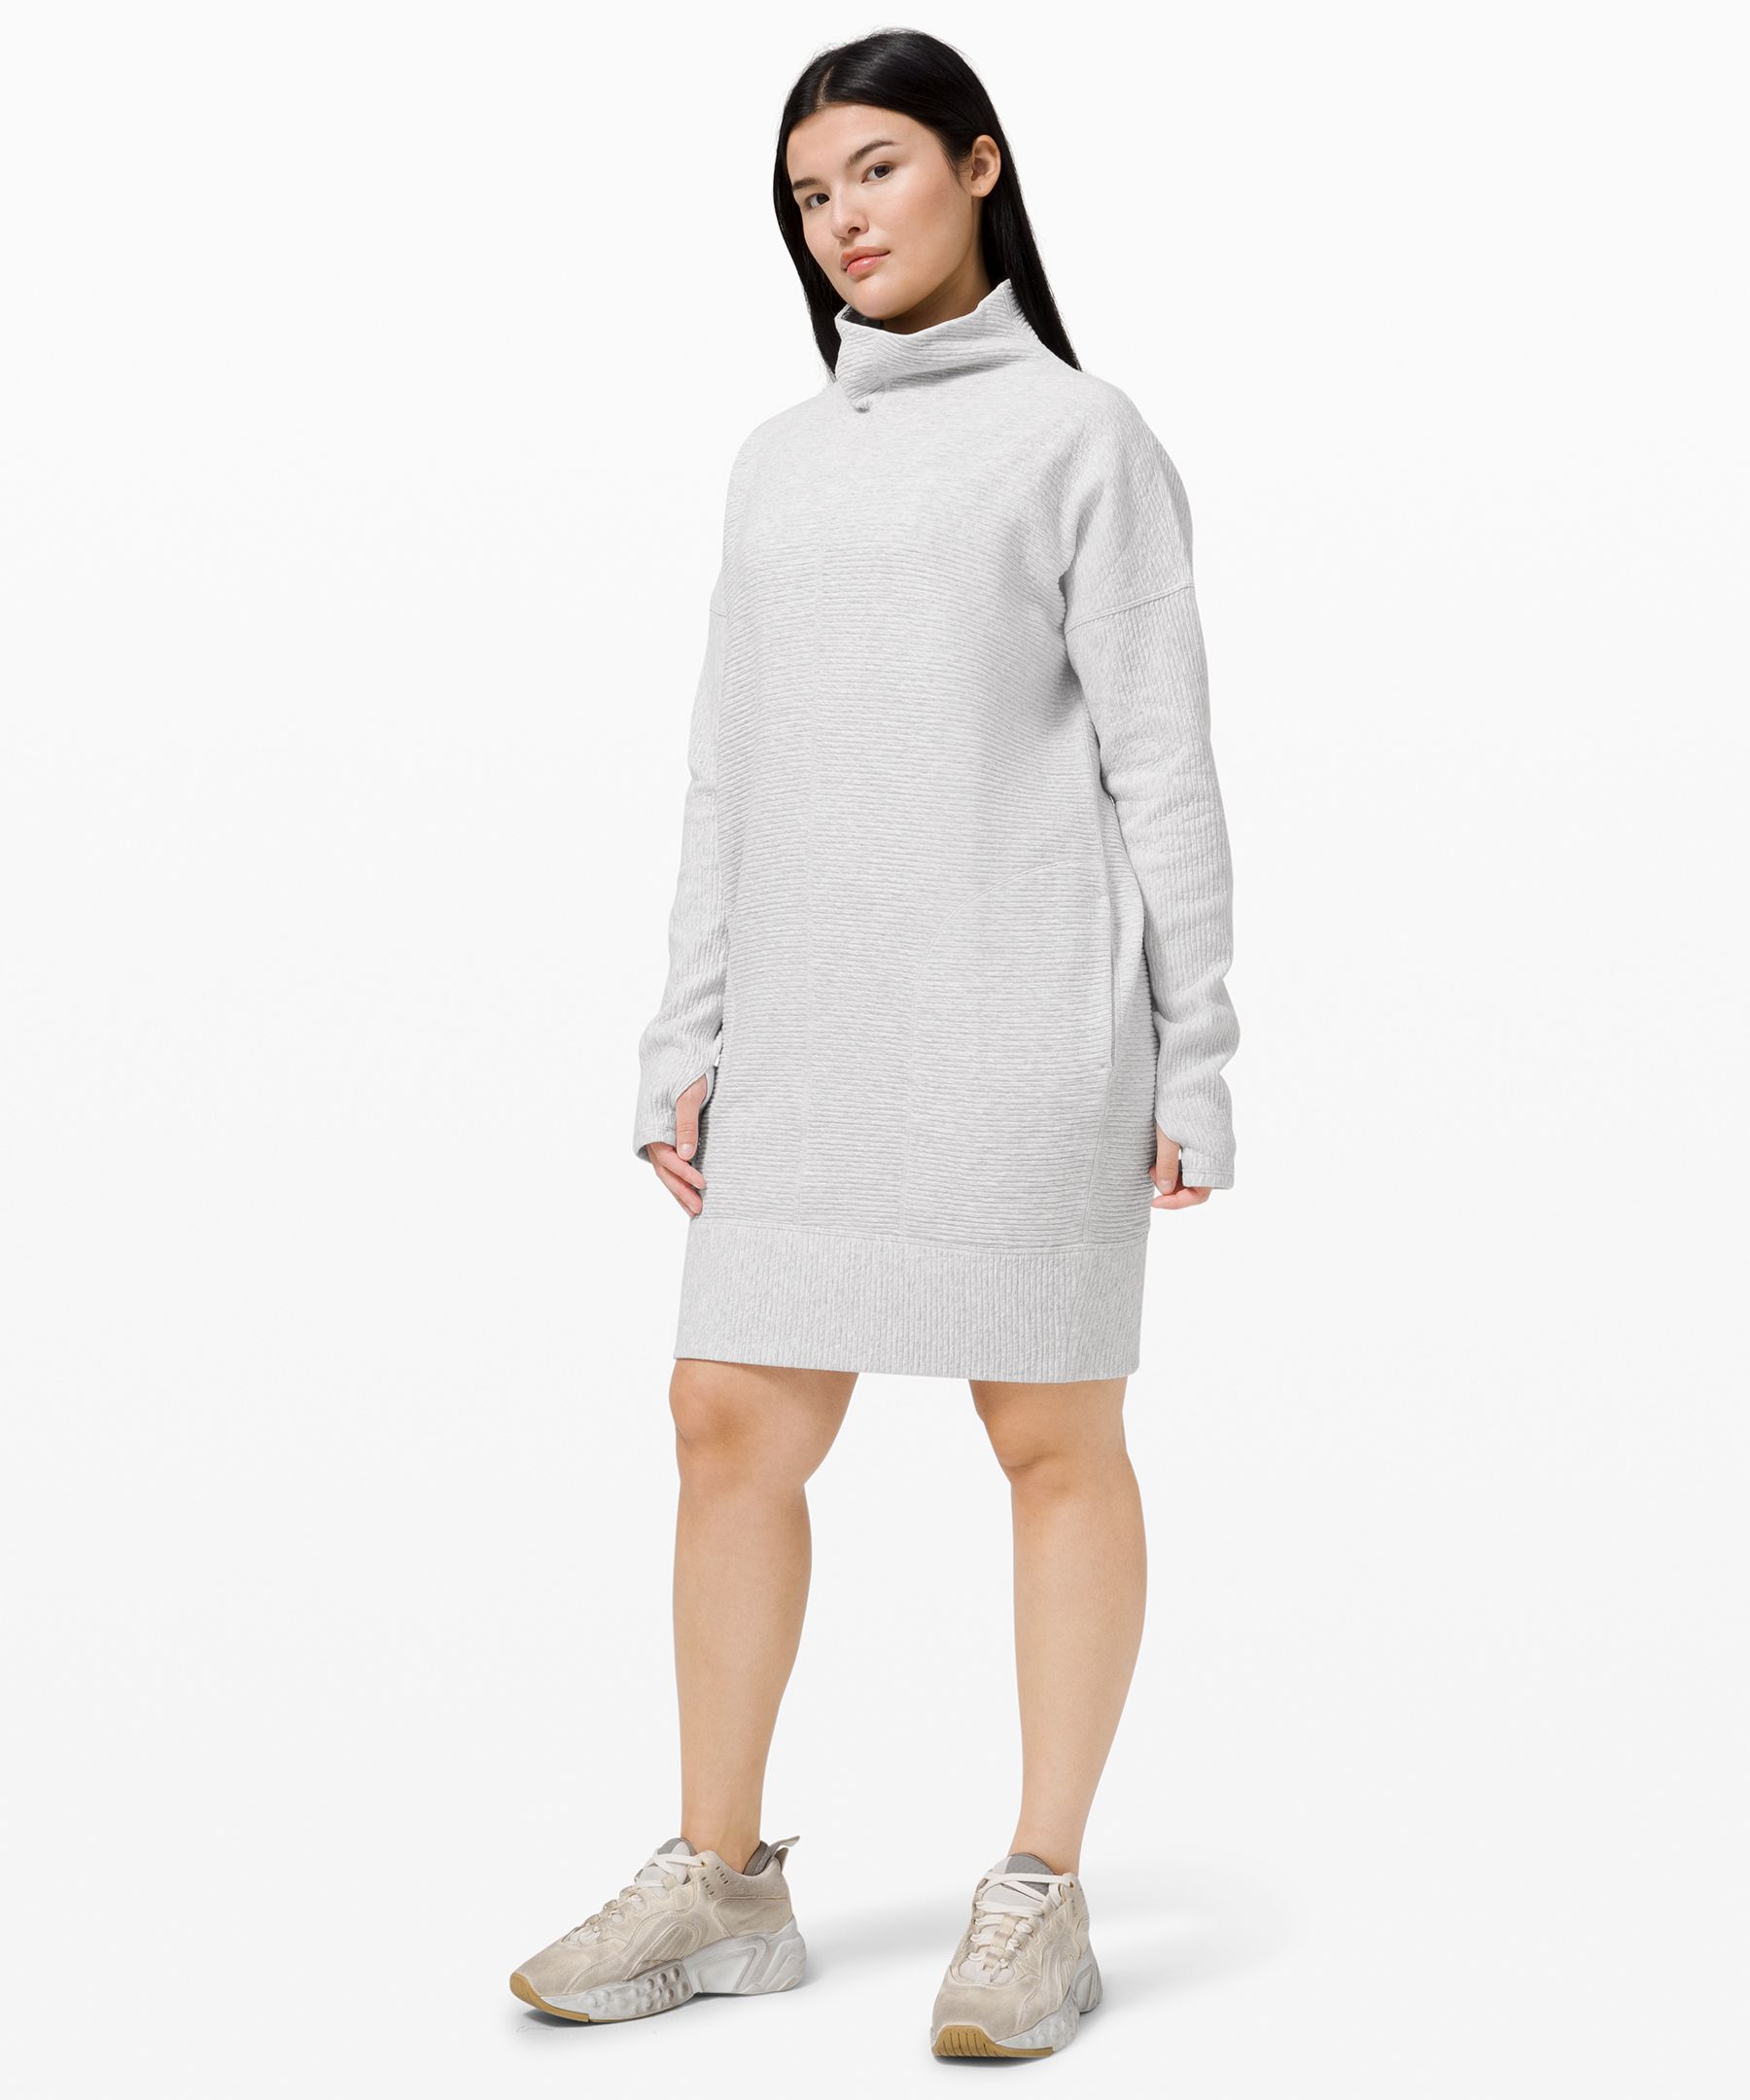 lululemon sweatshirt dress